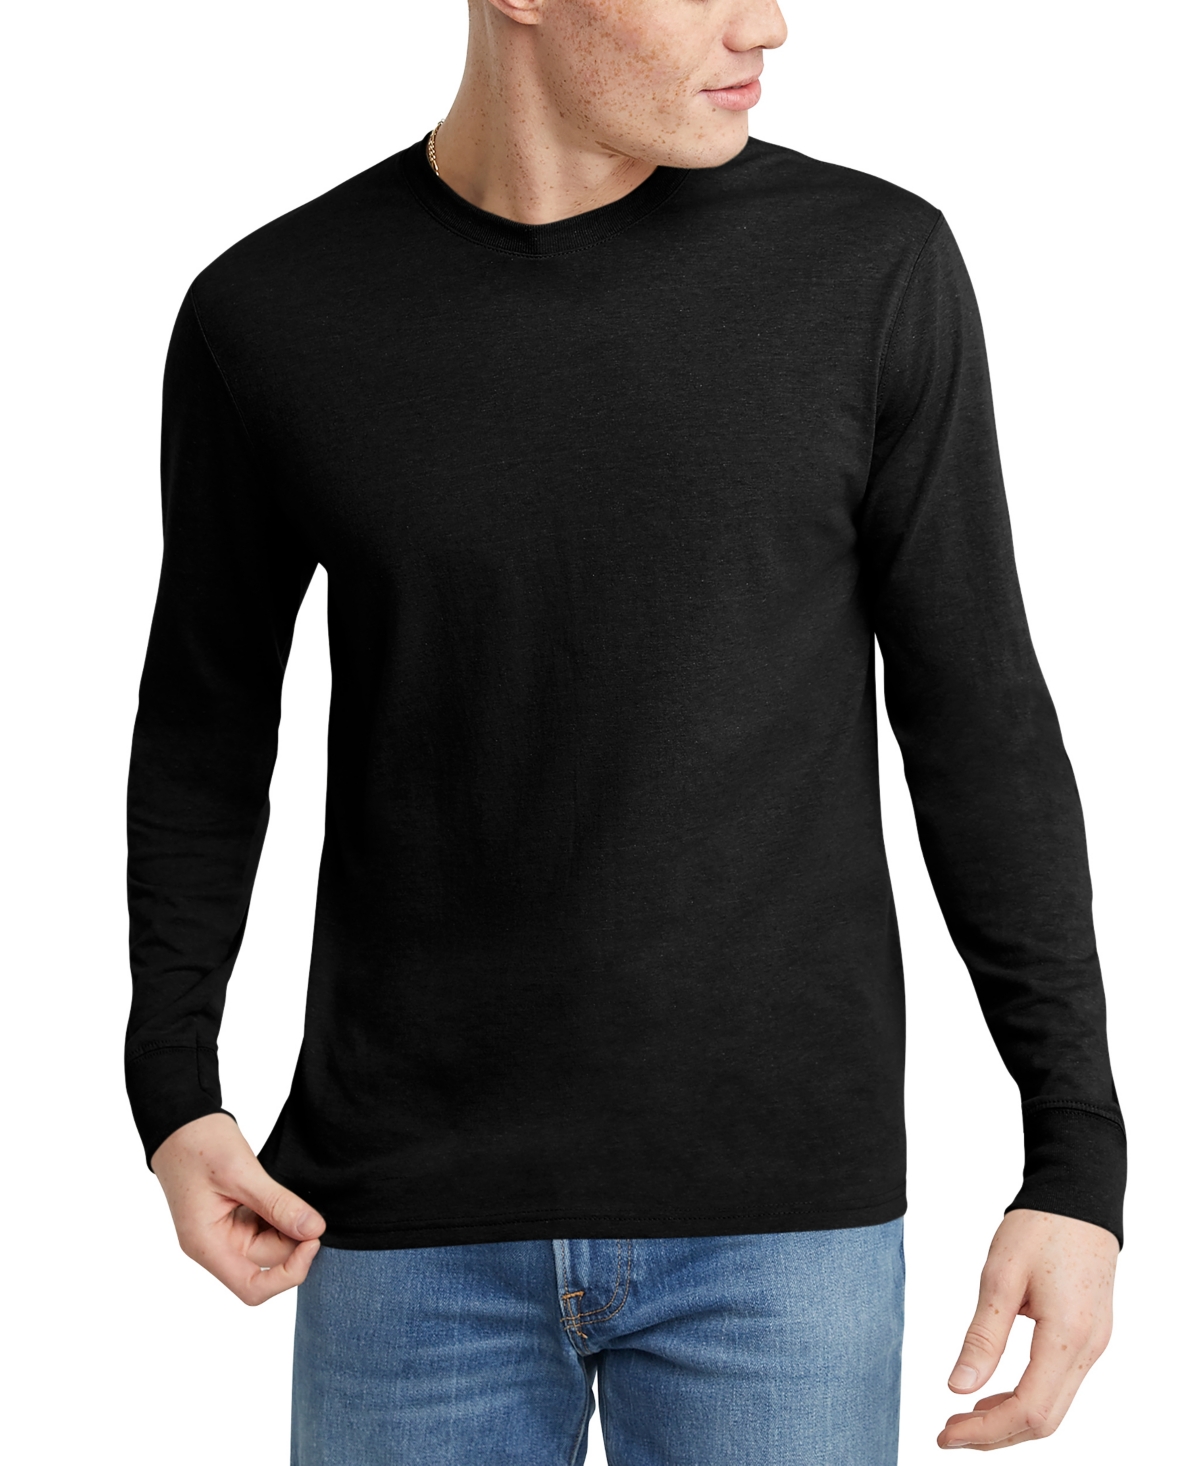 Men's Hanes Originals Tri-Blend Long Sleeve T-shirt - Green